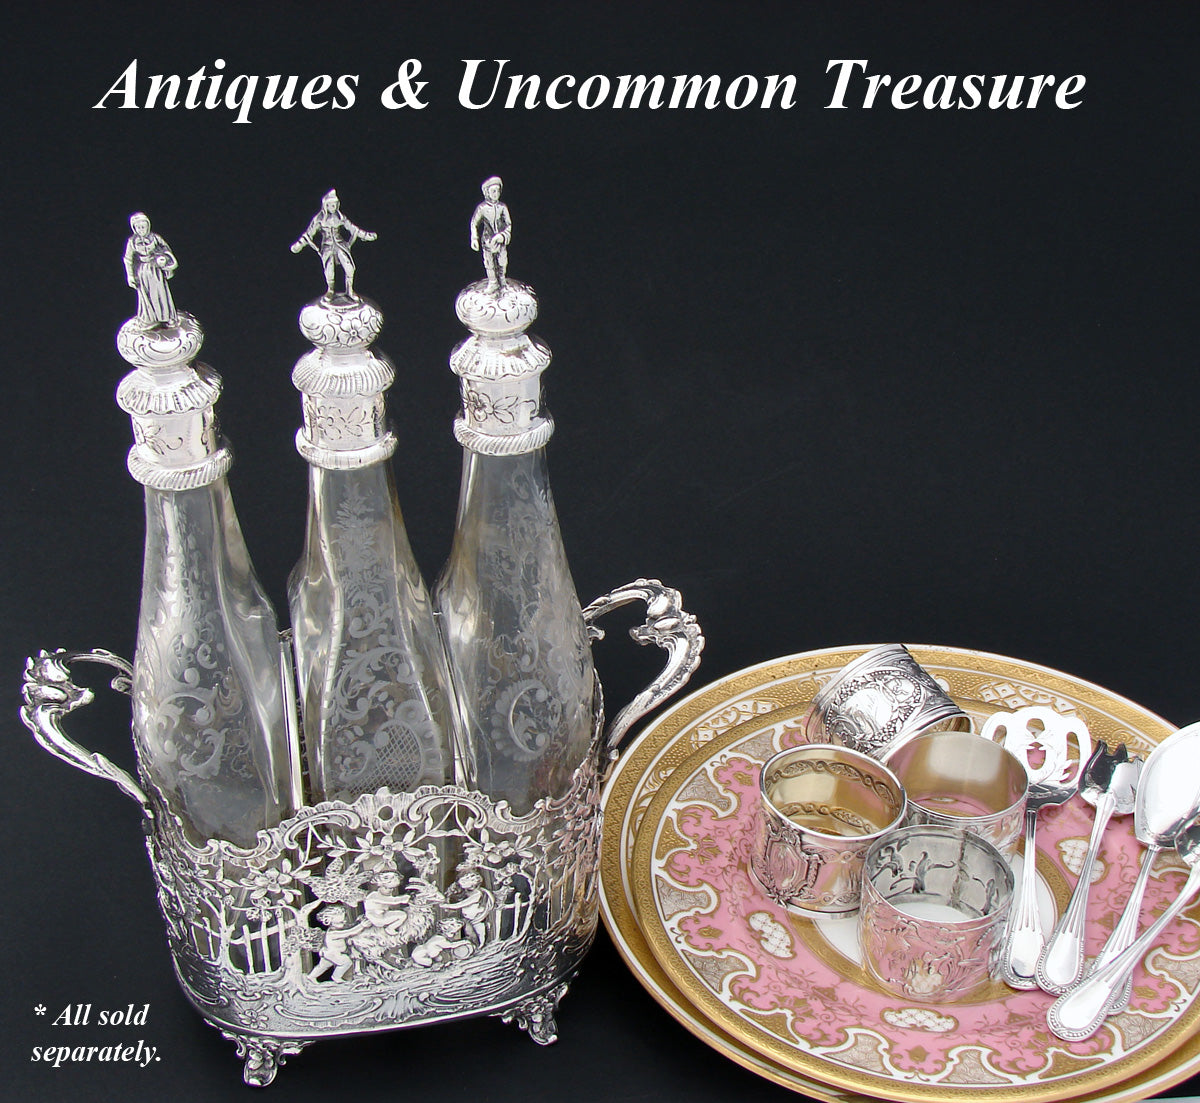 Magnificent Antique Continental Silver & Intaglio Etched Liqueur or Cruet Stand